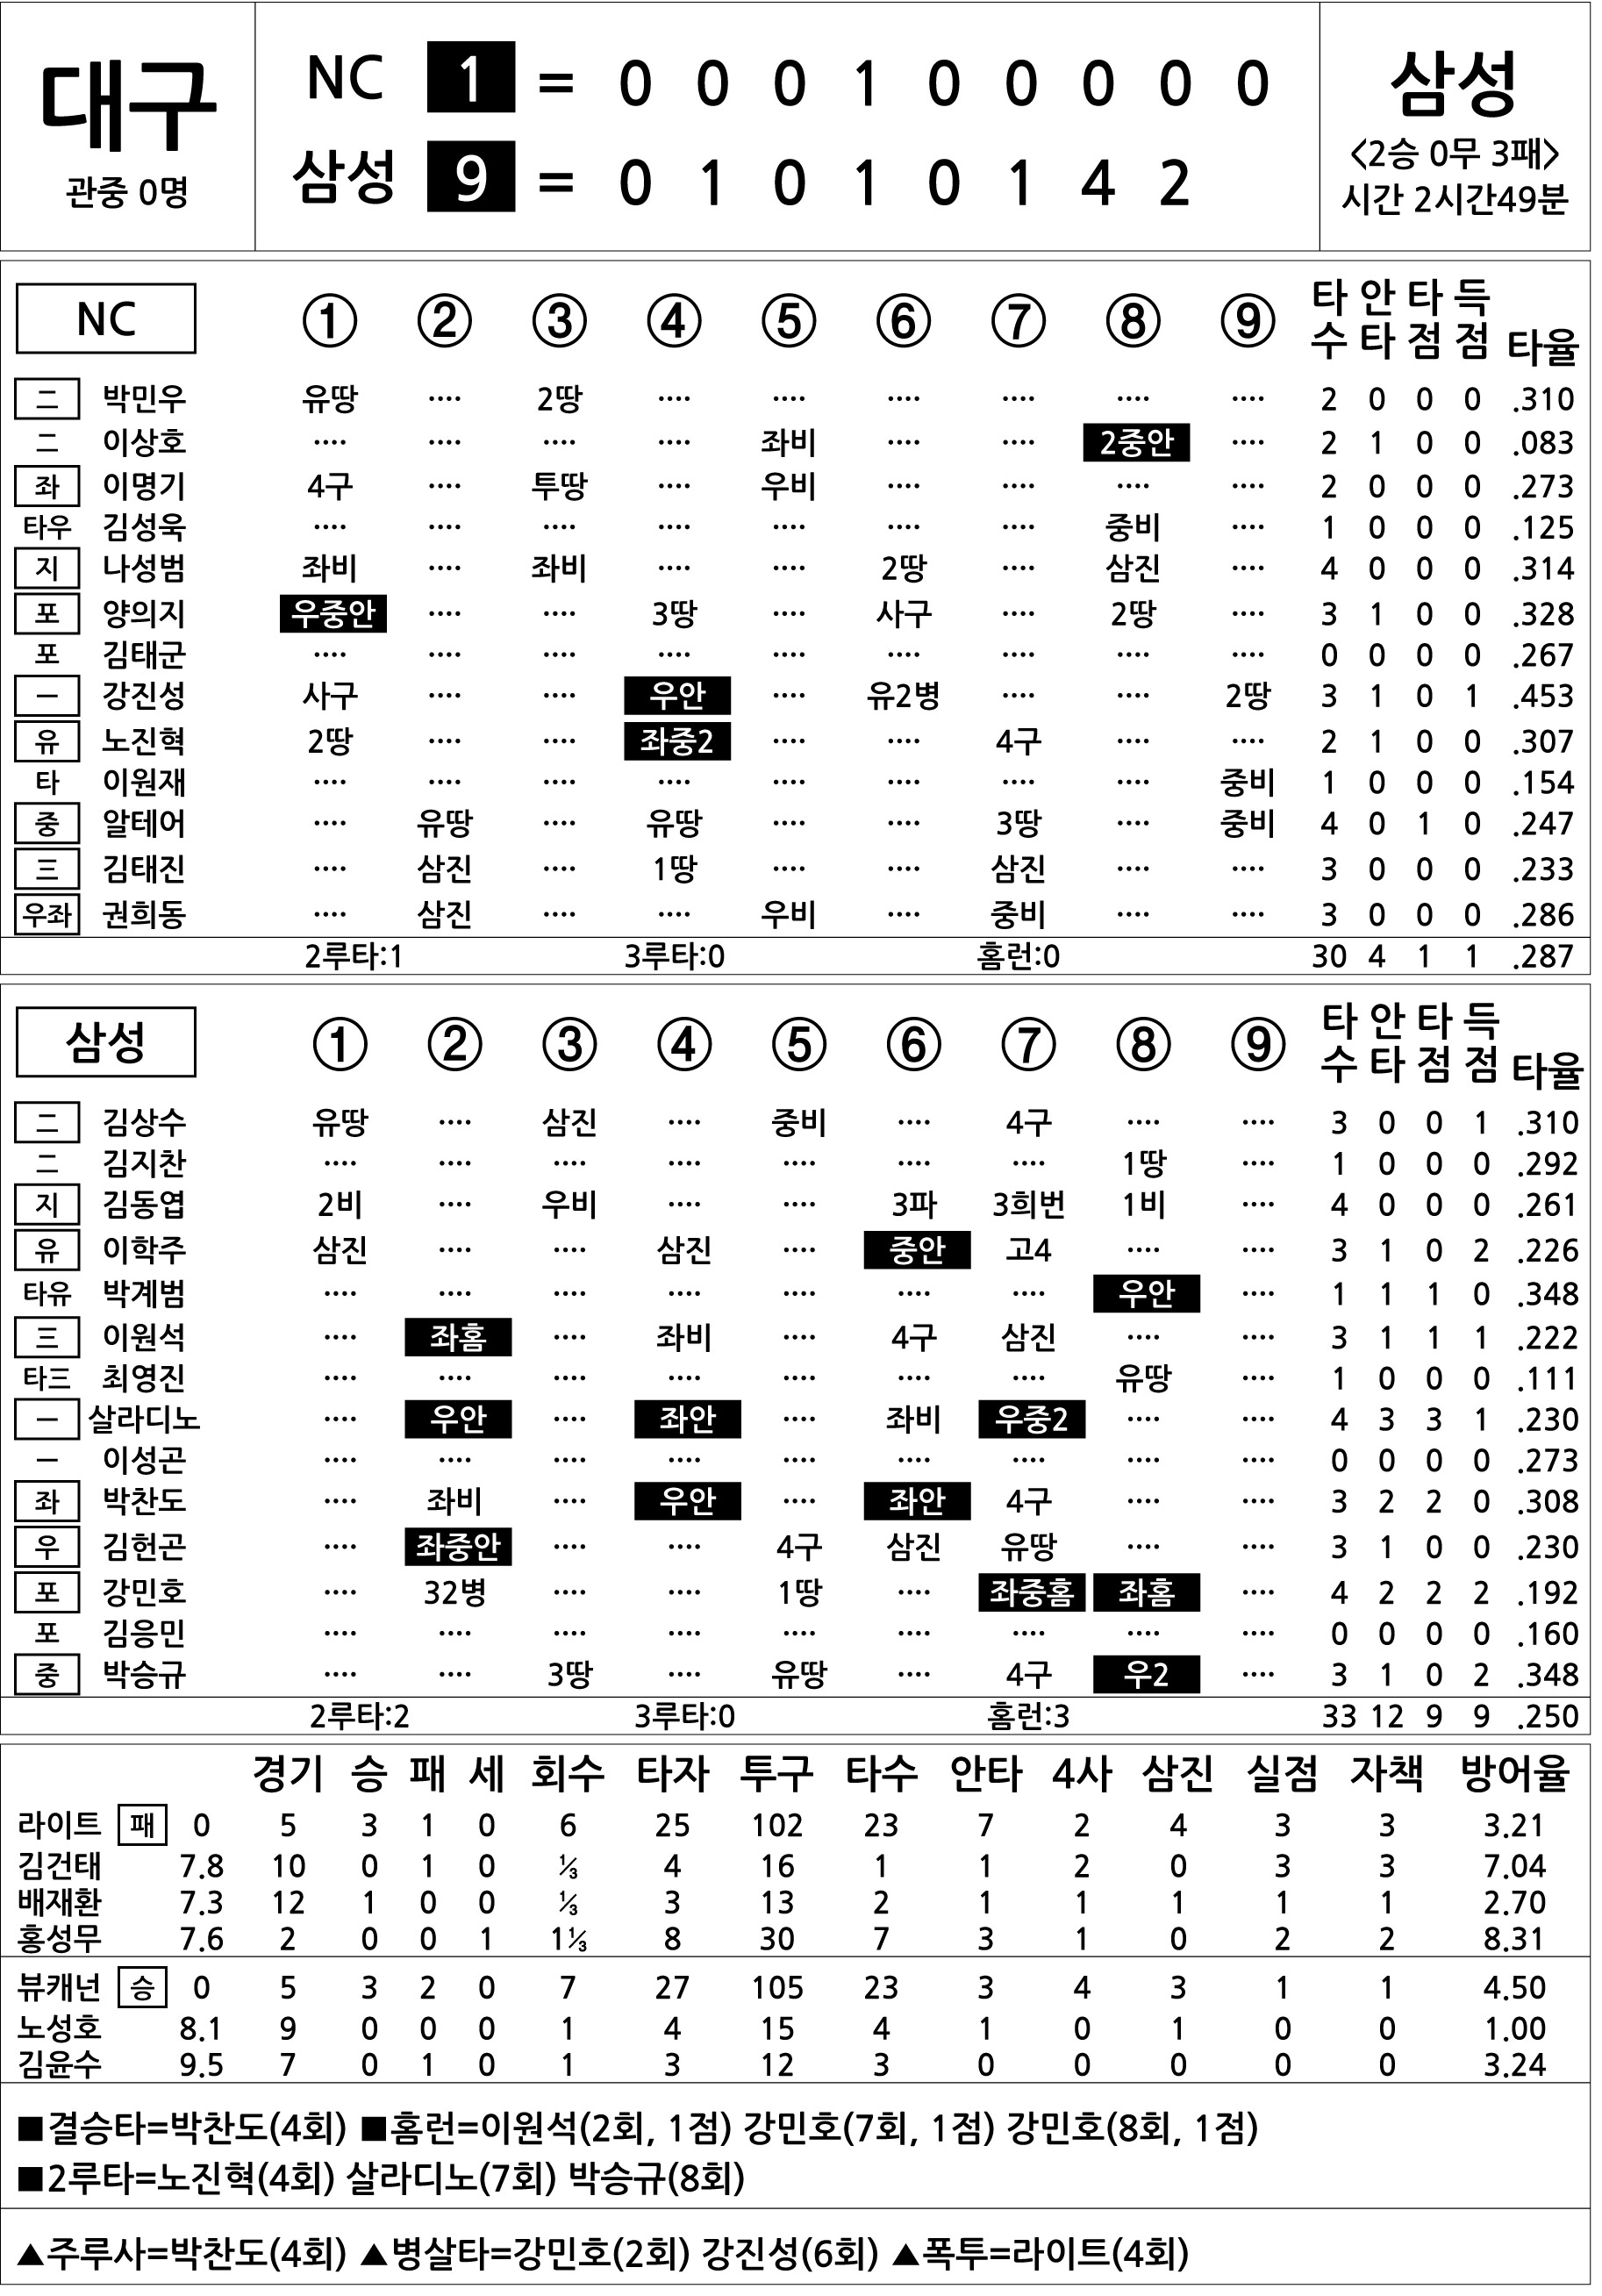  NC vs 삼성 (5월 30일)